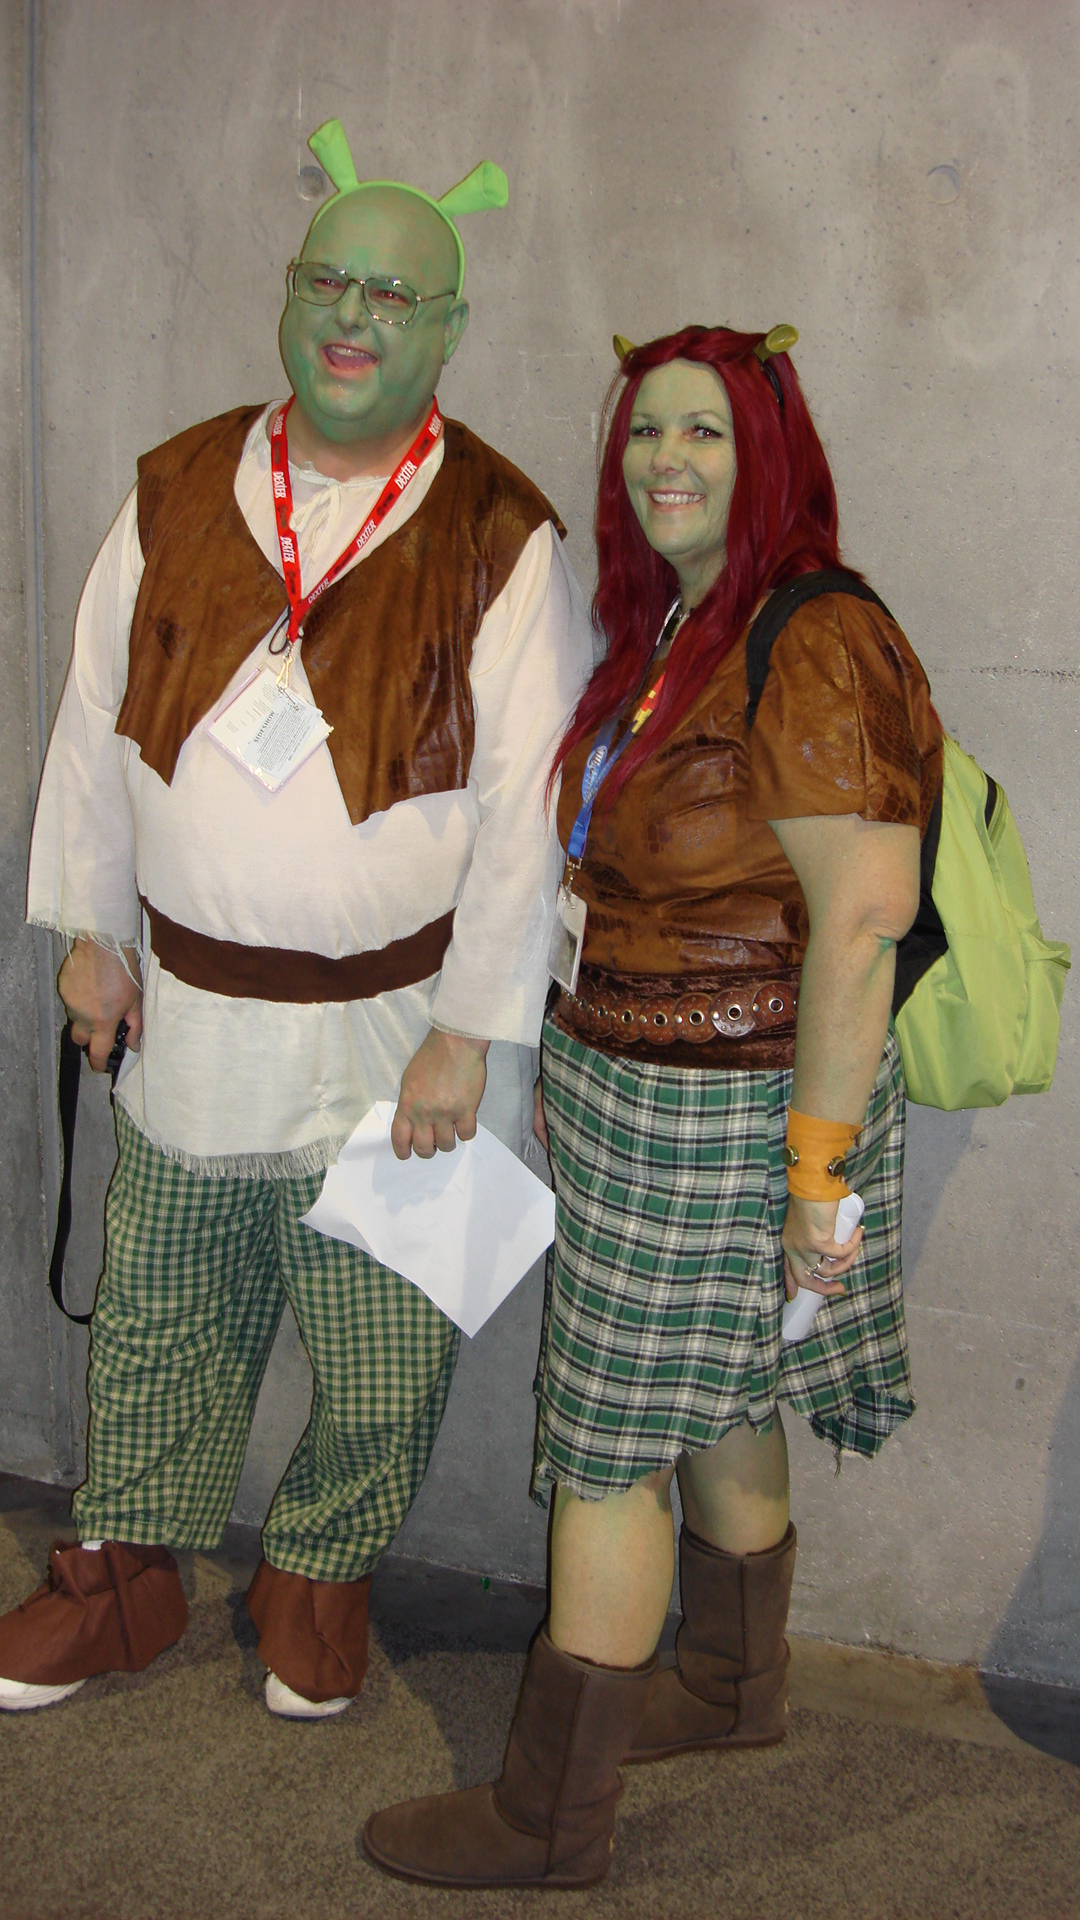 https://www.entertainmentfuse.com/images/PAC - Comic Con - Shrek Family.JPG